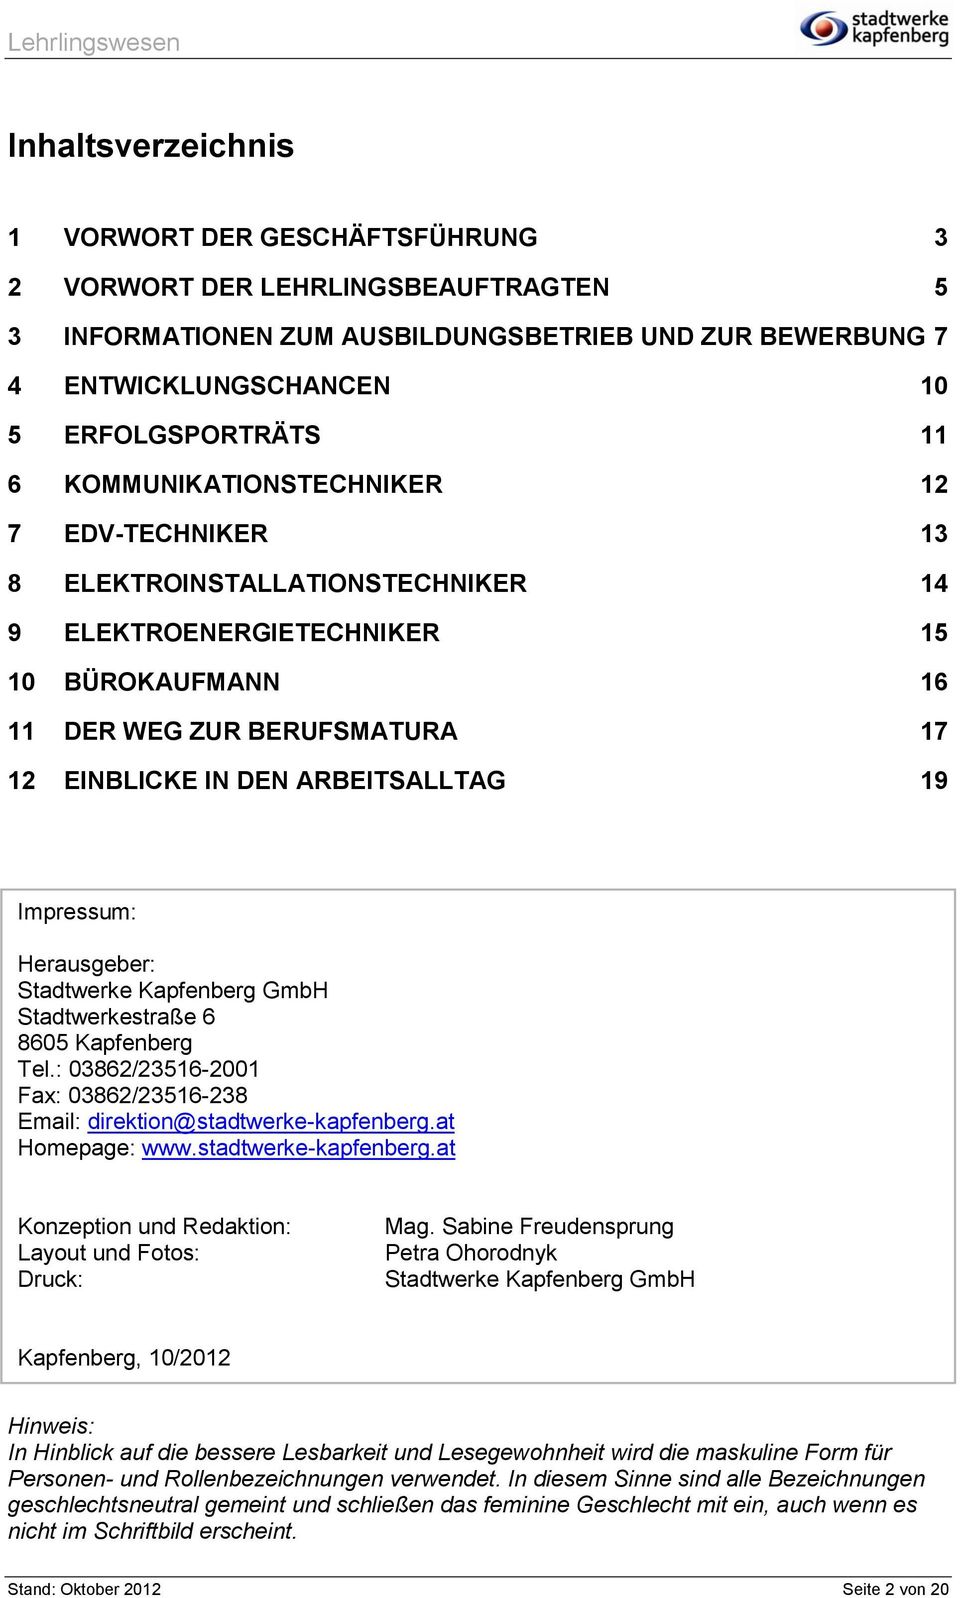 Impressum: Herausgeber: Stadtwerke Kapfenberg GmbH Stadtwerkestraße 6 8605 Kapfenberg Tel.: 03862/23516-2001 Fax: 03862/23516-238 Email: direktion@stadtwerke-kapfenberg.at Homepage: www.